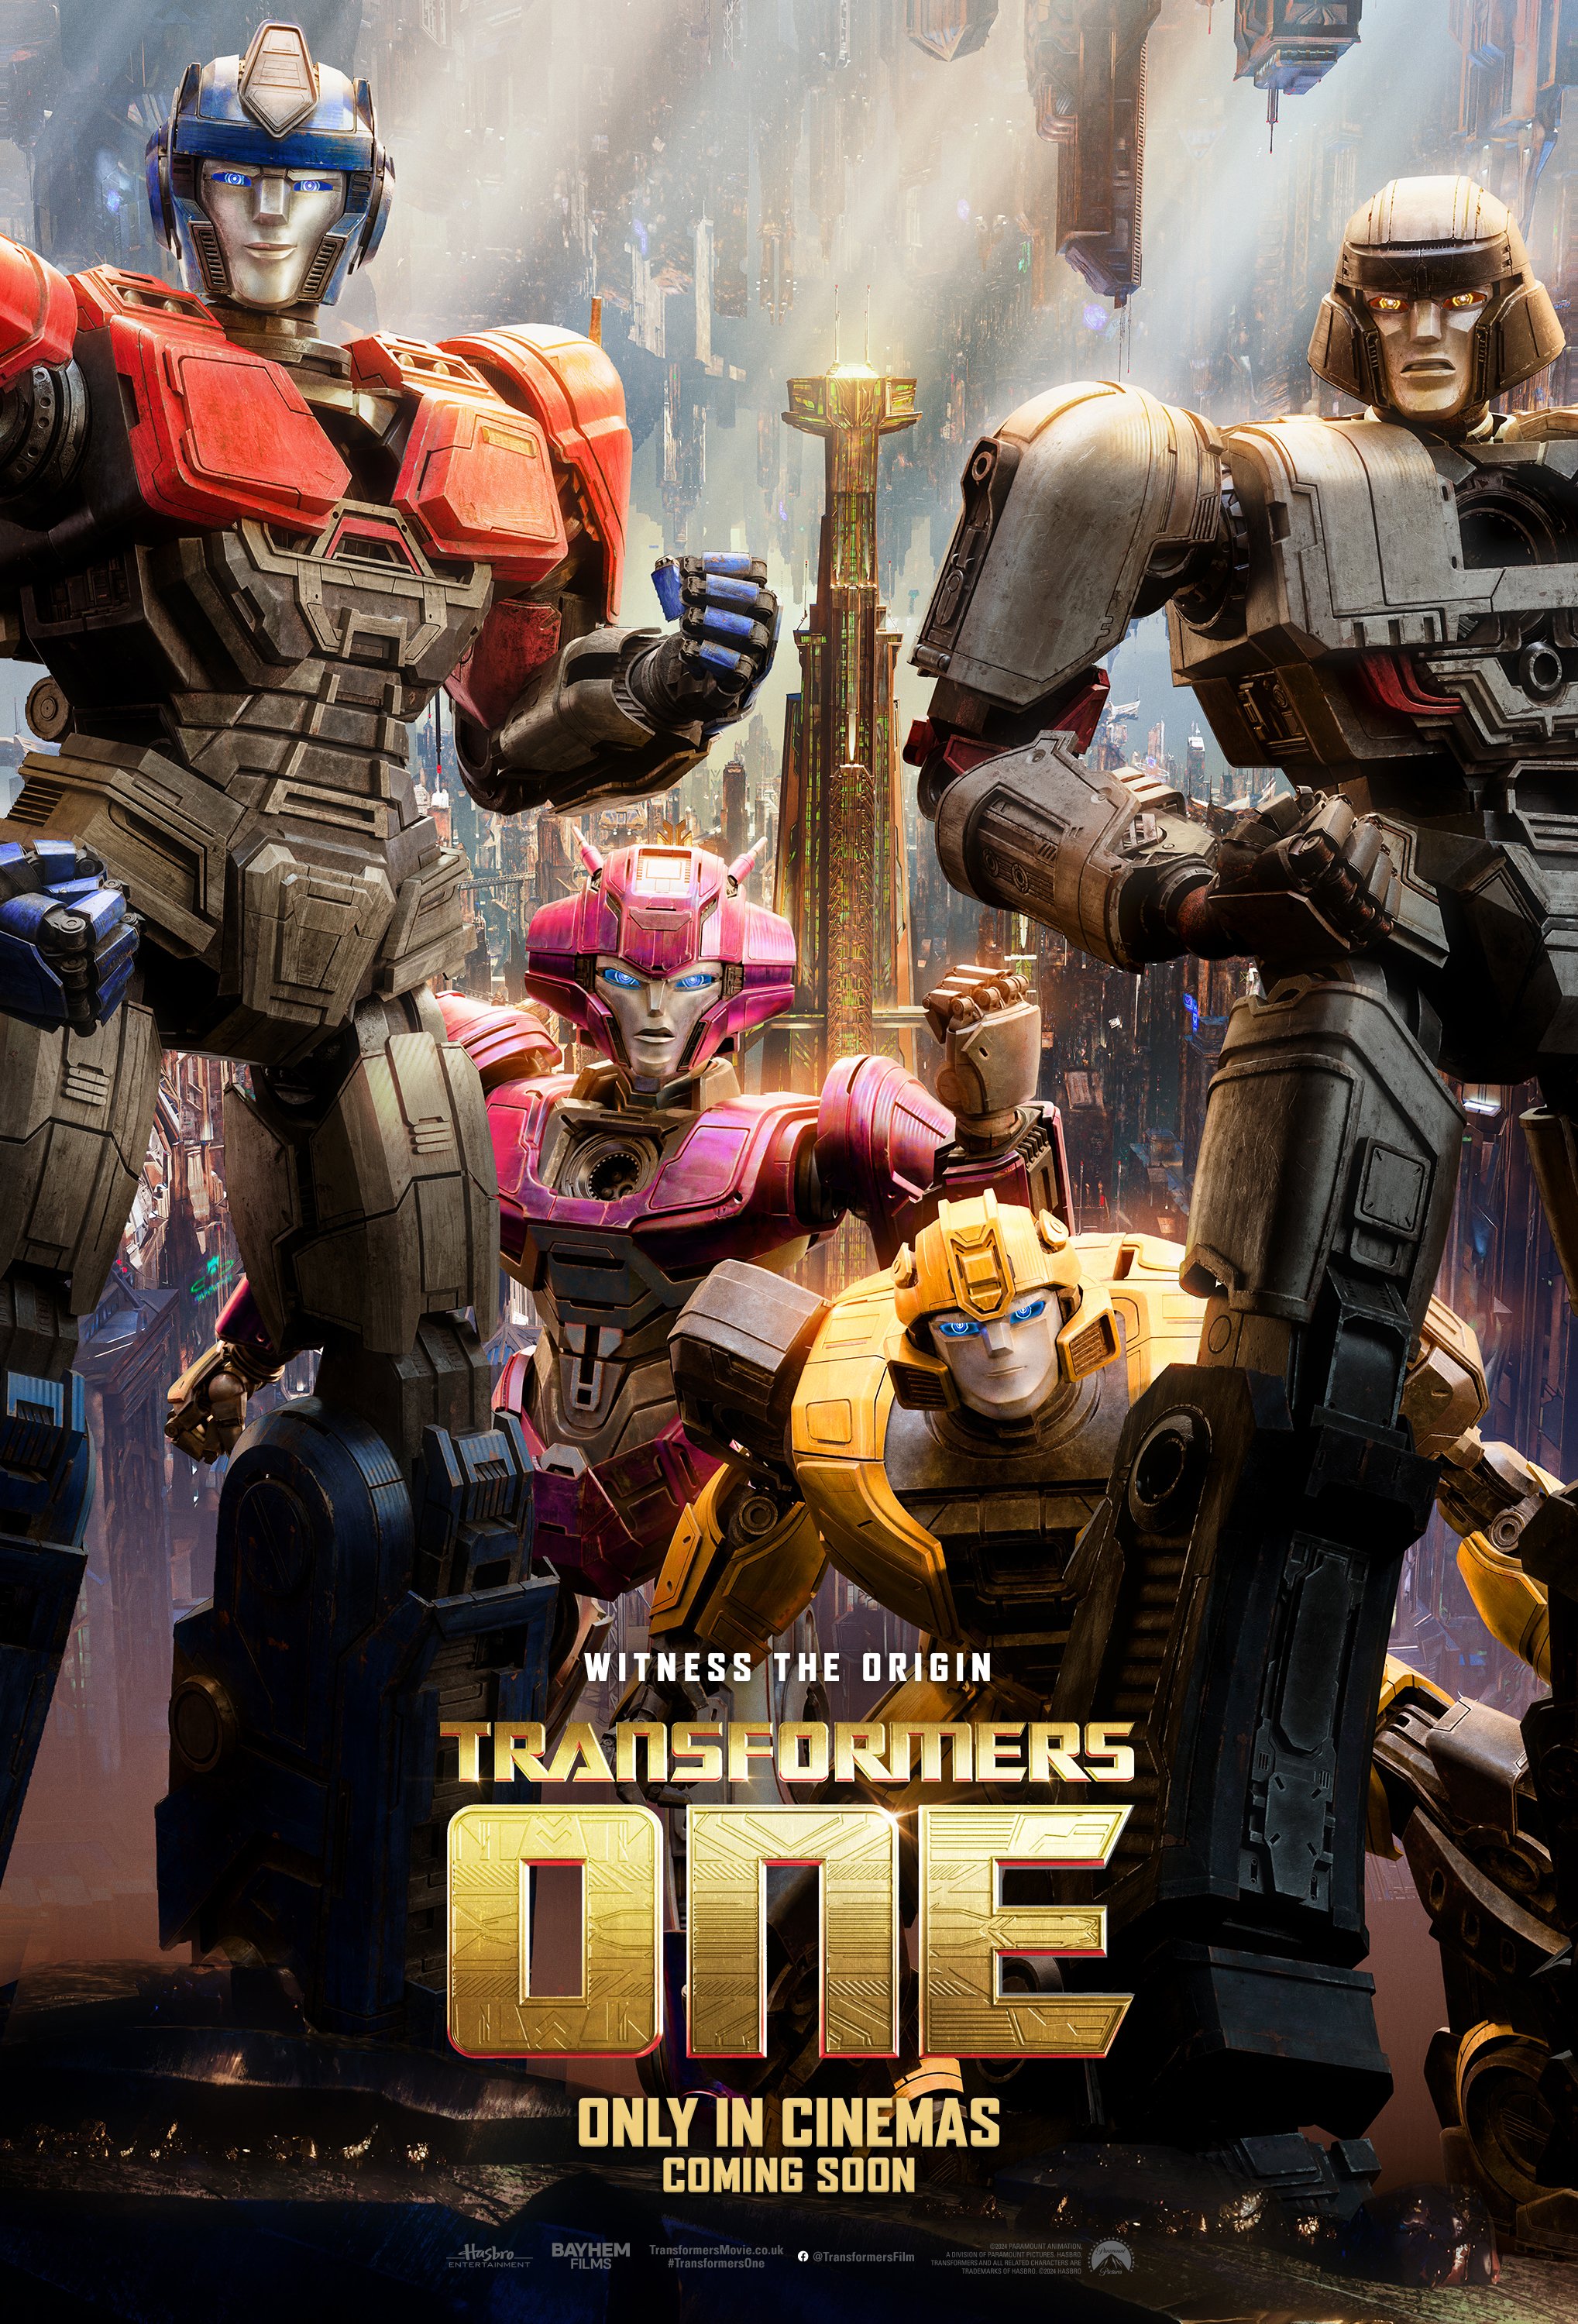 Transformers One lanza su primer avance 3